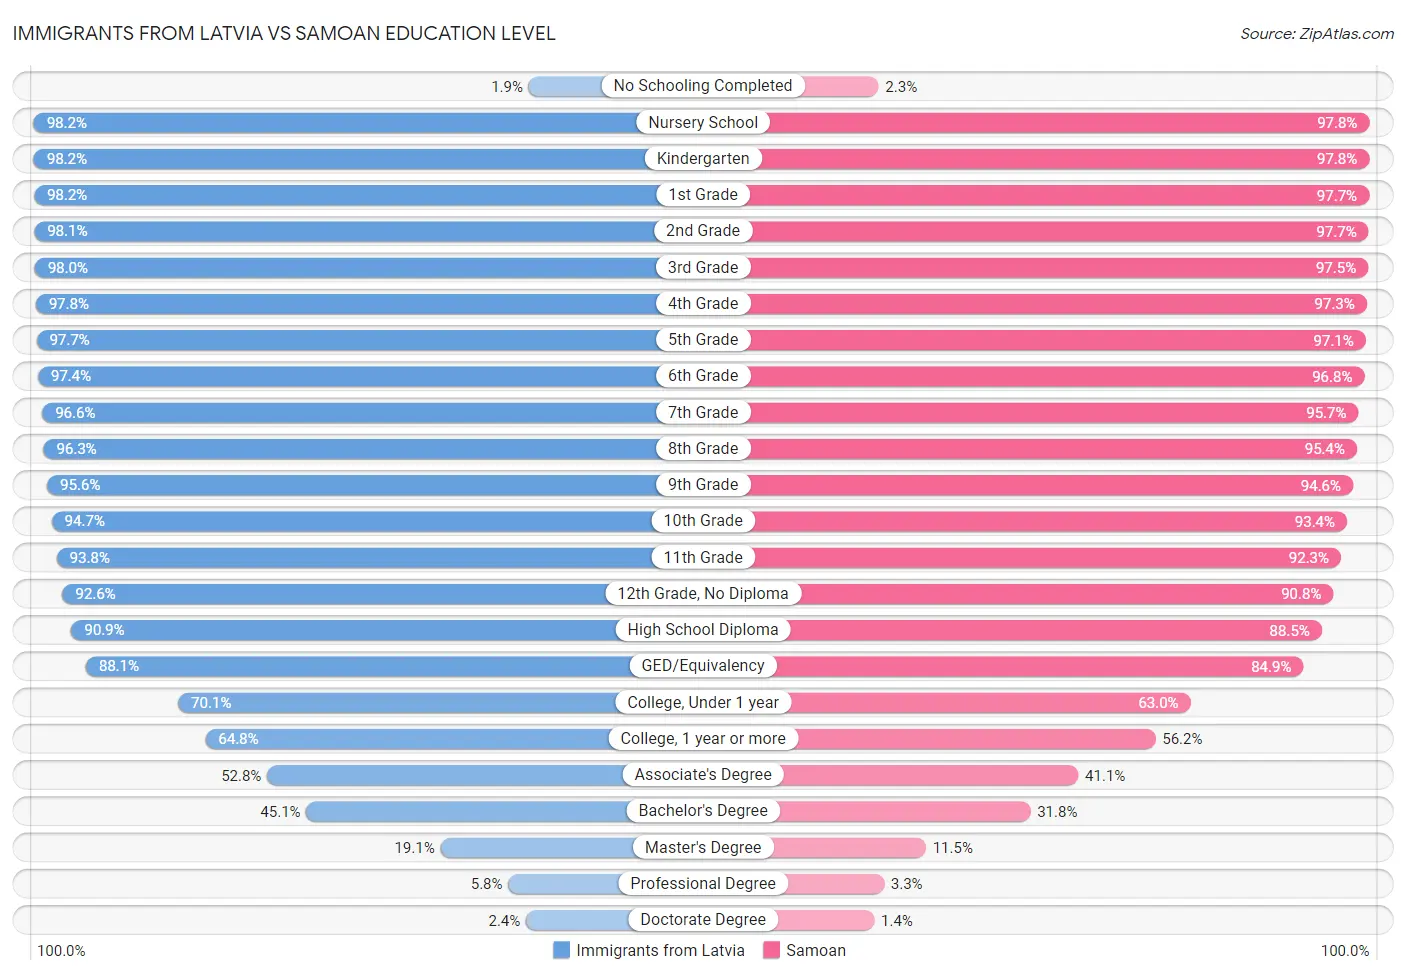 Immigrants from Latvia vs Samoan Education Level